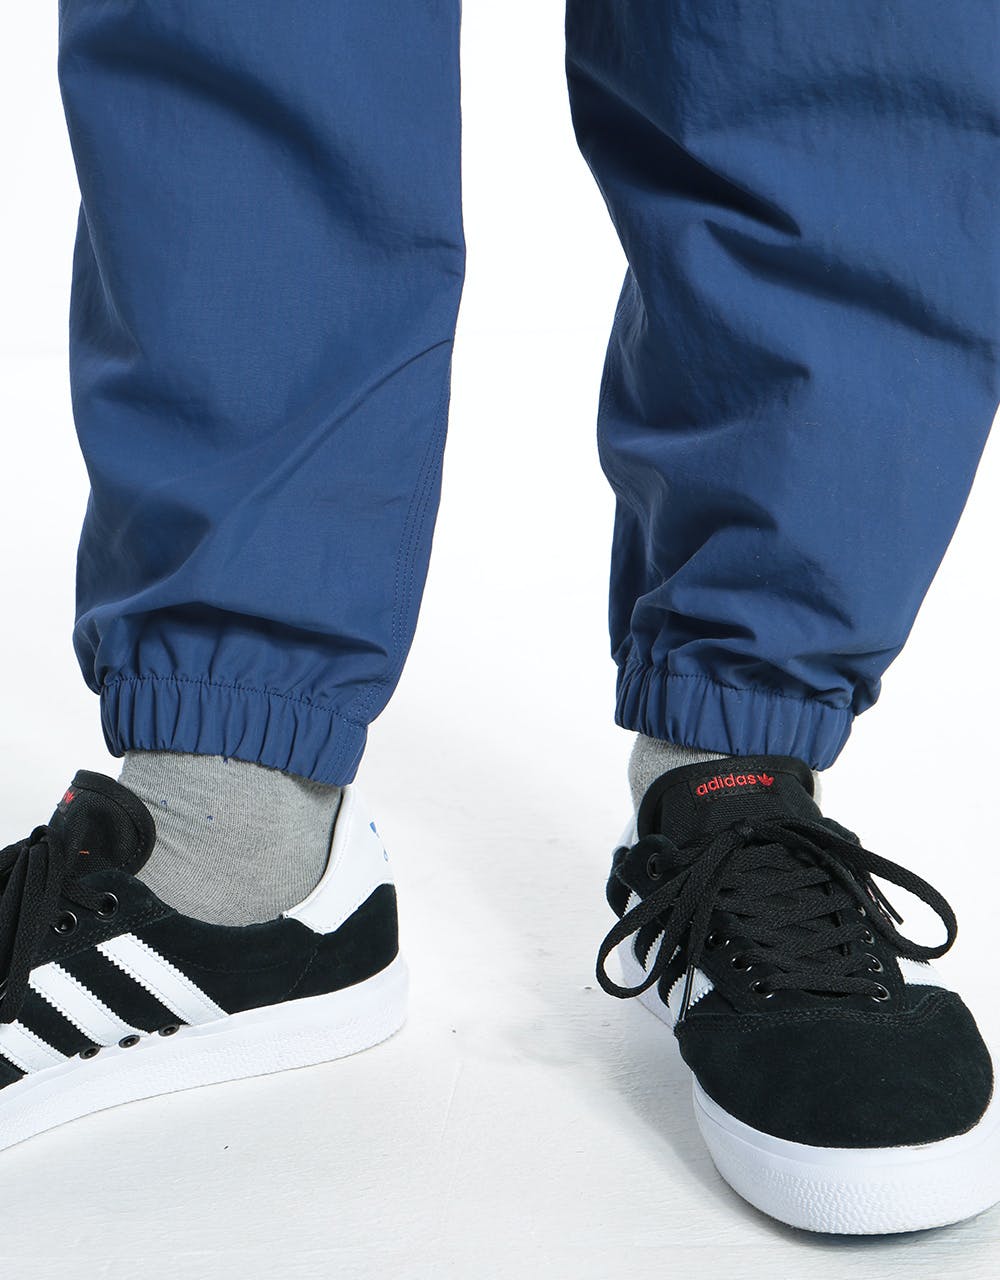 Adidas Workshop Pants  - Tech Indigo